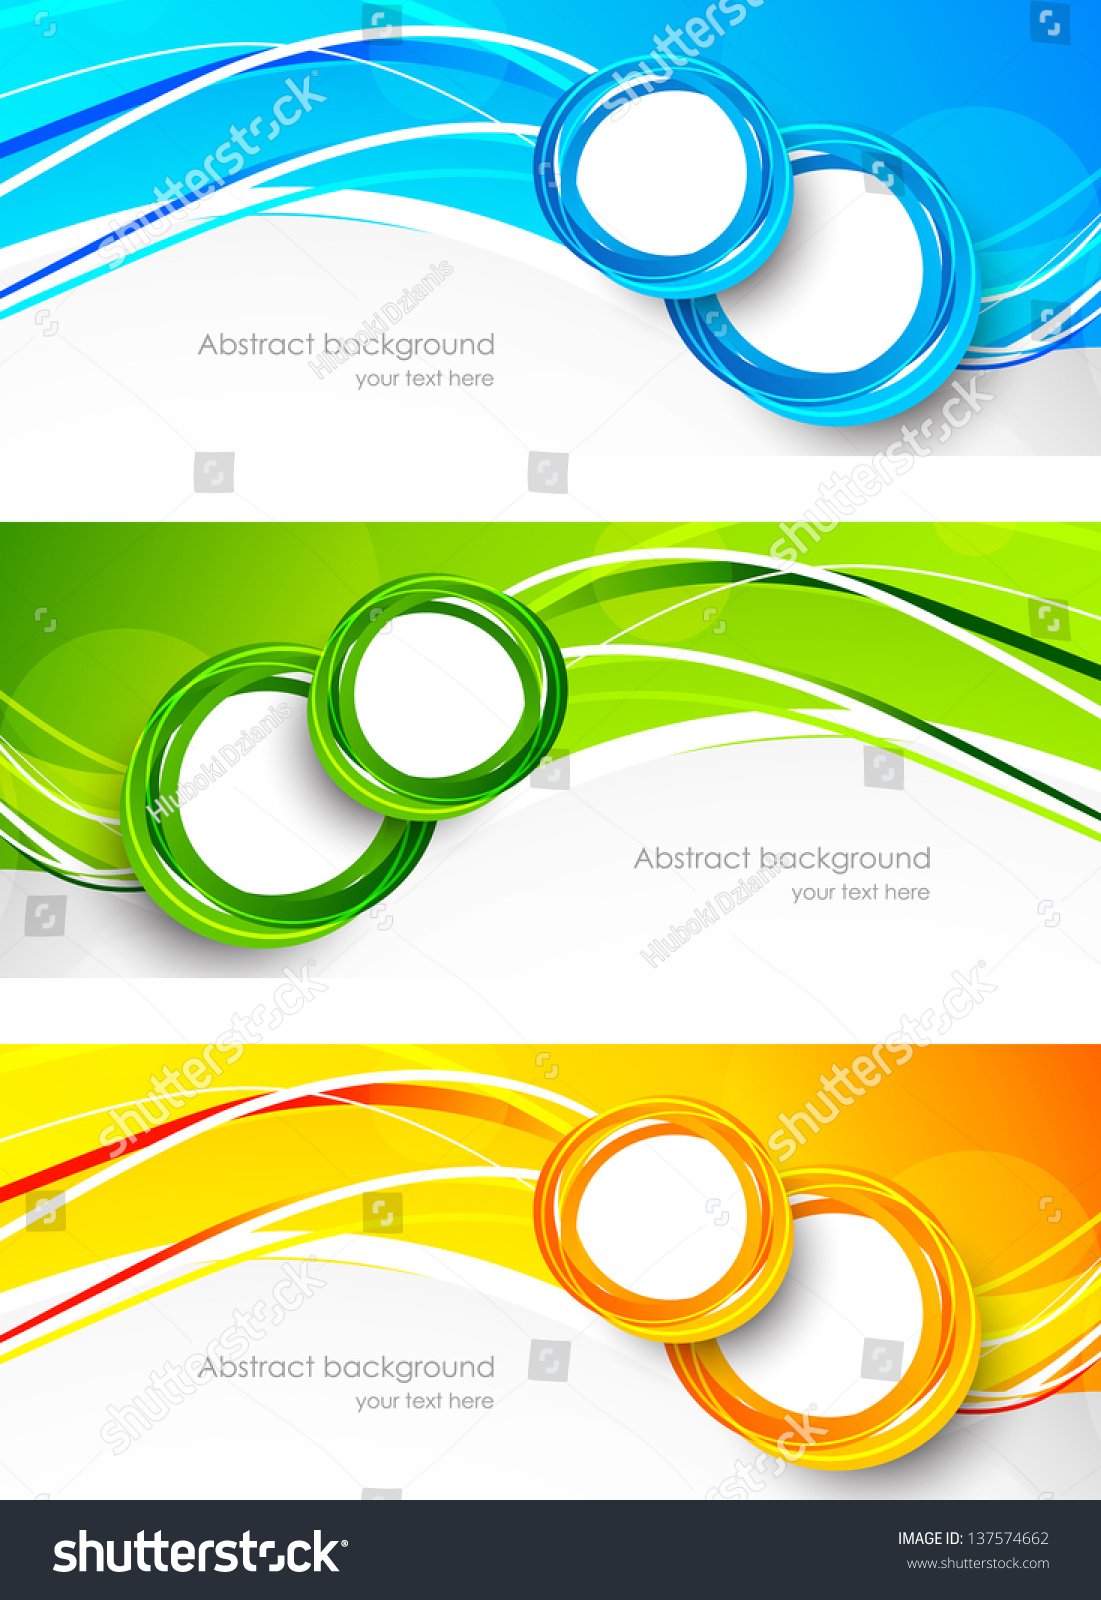 Set Of Wavy Banners Stock Vector Illustration 137574662 : Shutterstock